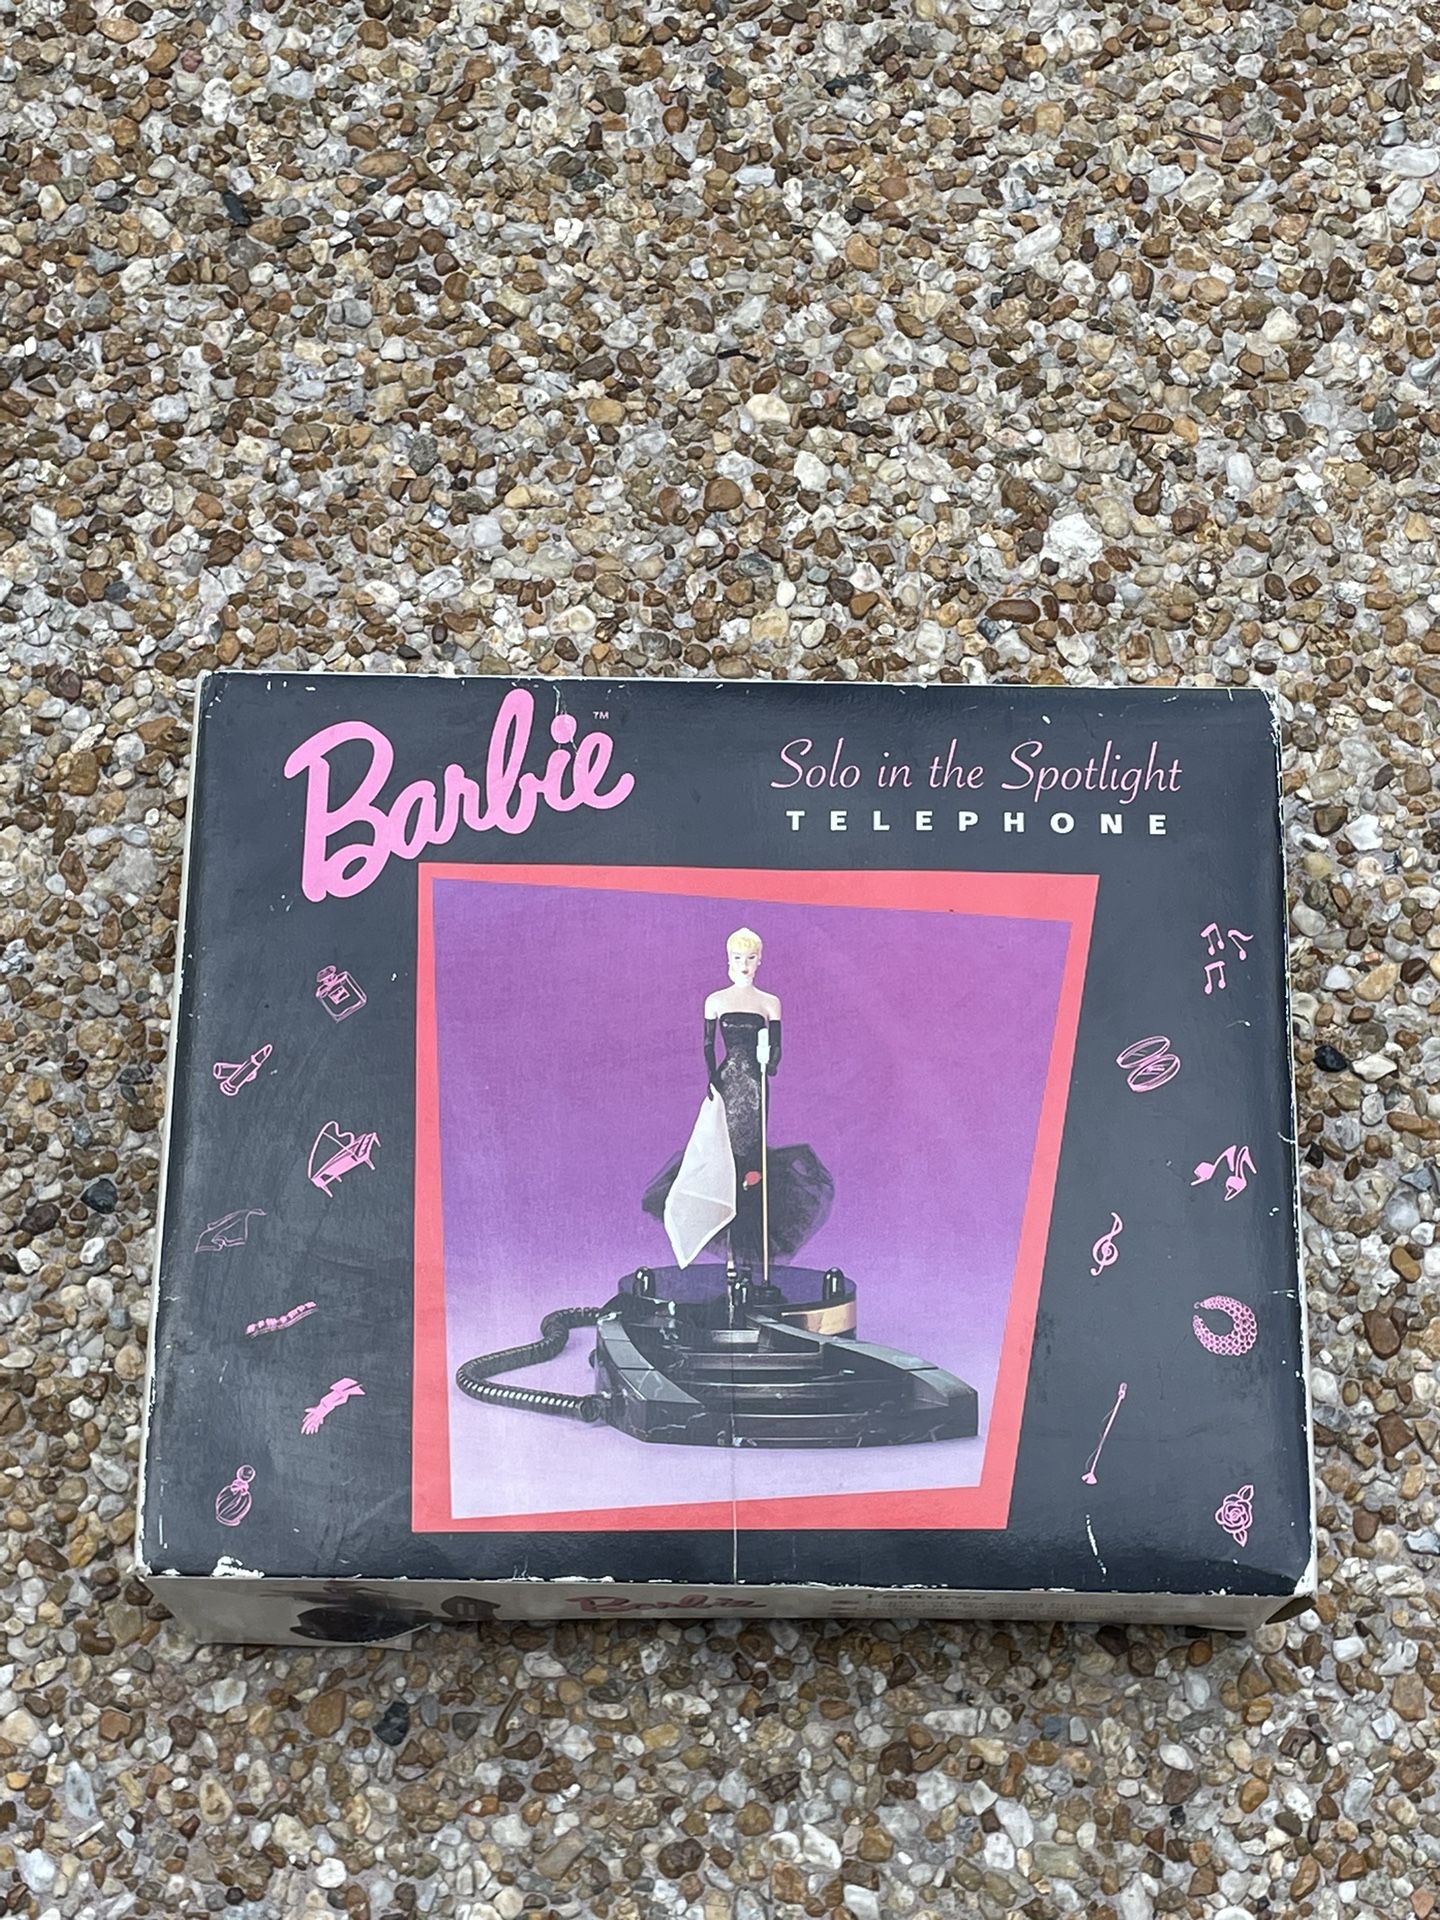 Barbie Telephone - Solo In The SpotLight